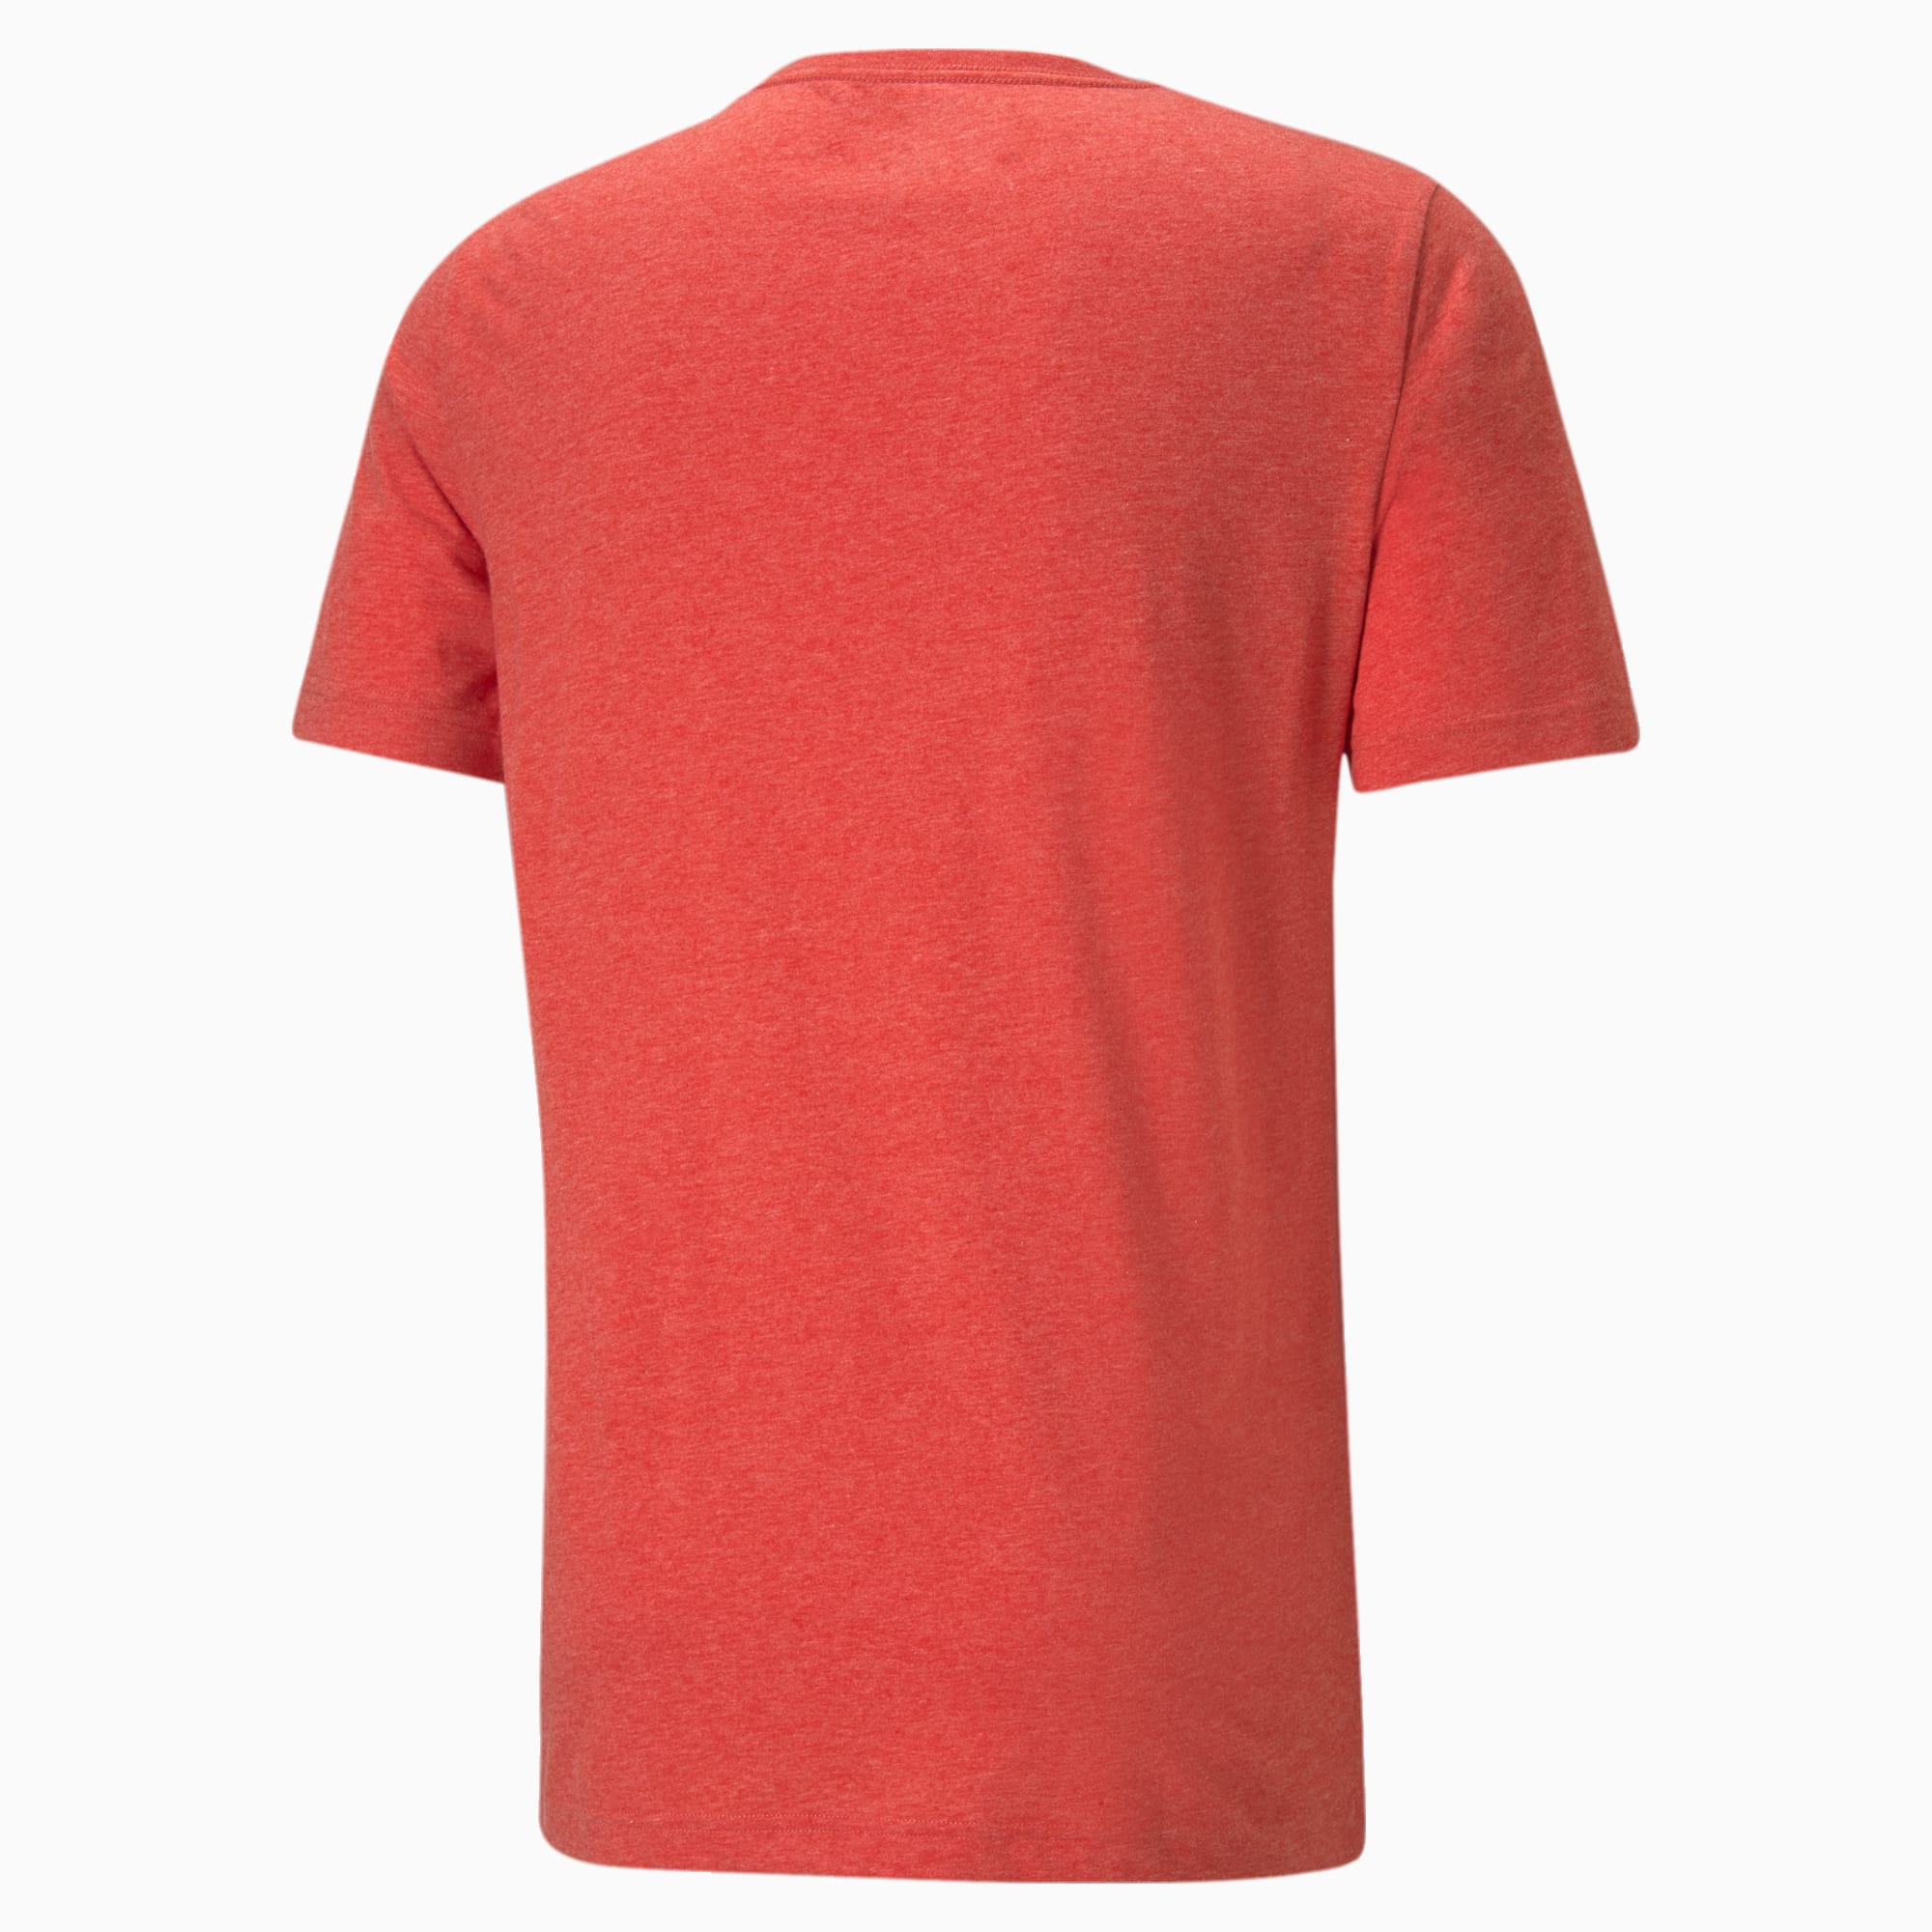 PUMA Essentials Heather Men's T-Shirt, High Risk Red, Size XL, Clothing